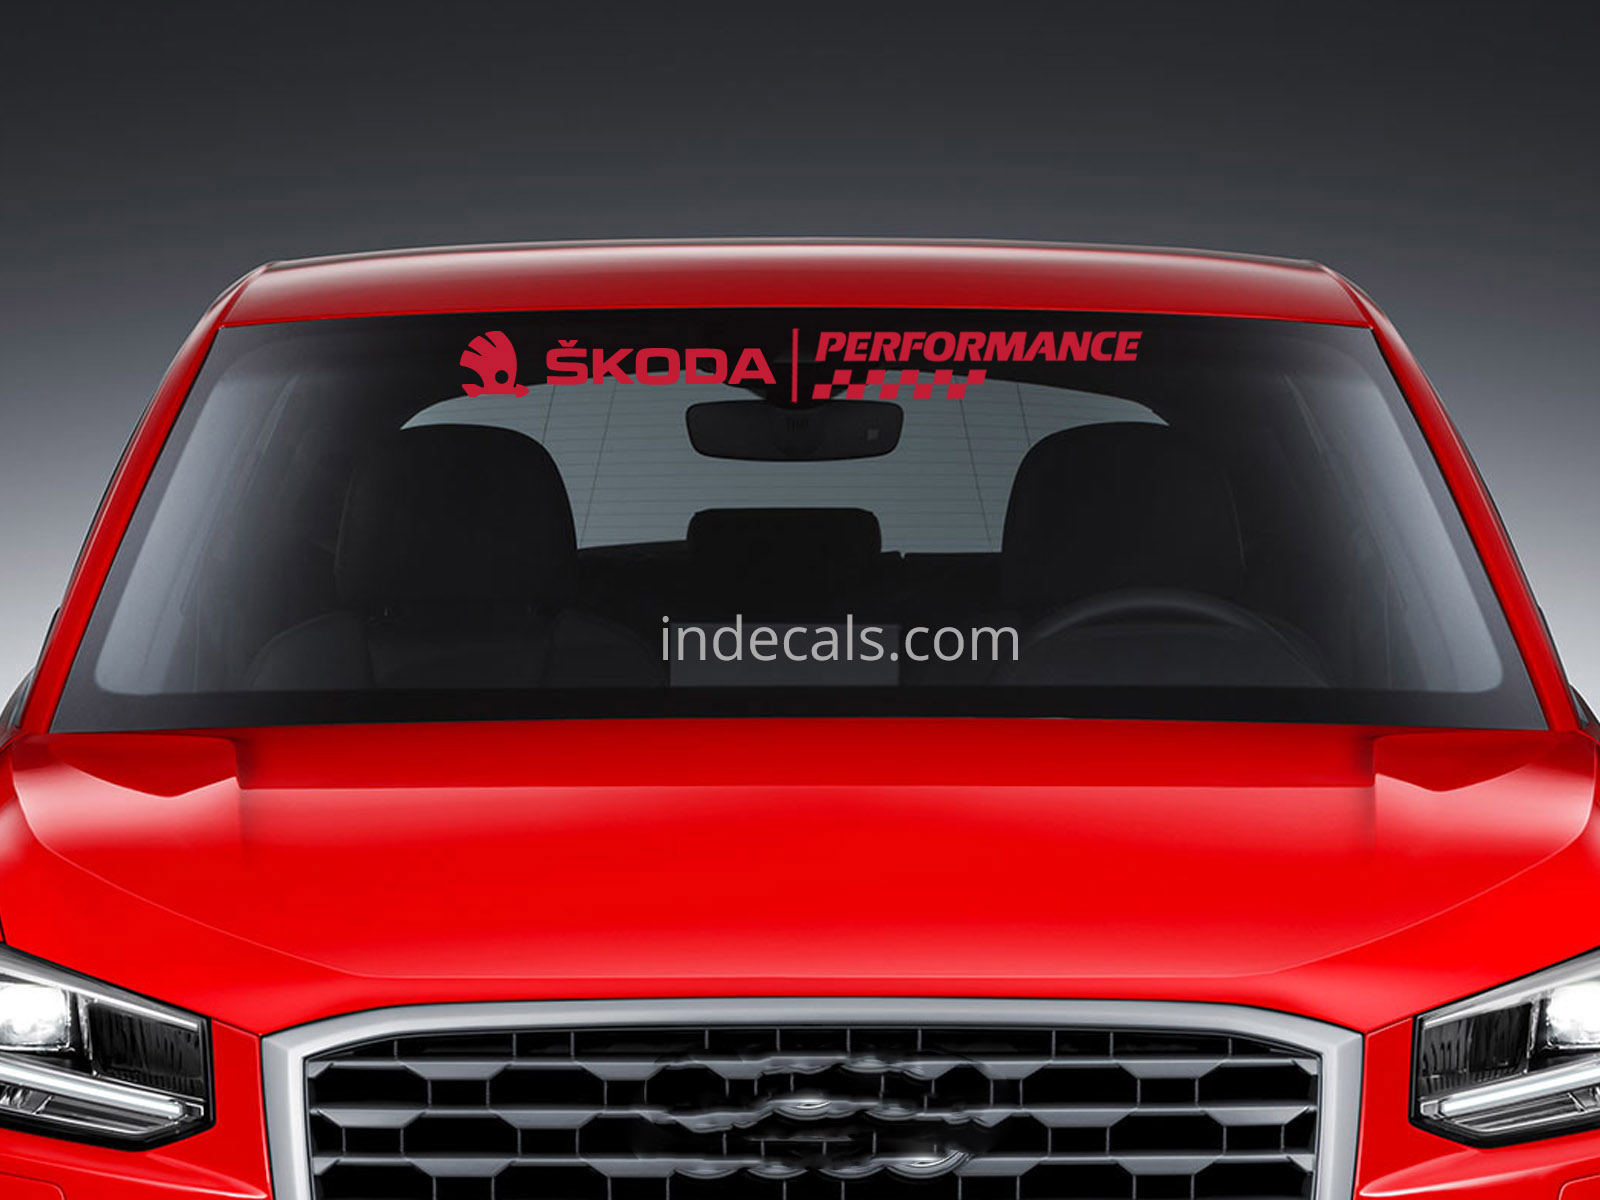 1 x Skoda Performance Sticker for Windshield or Back Window - Red